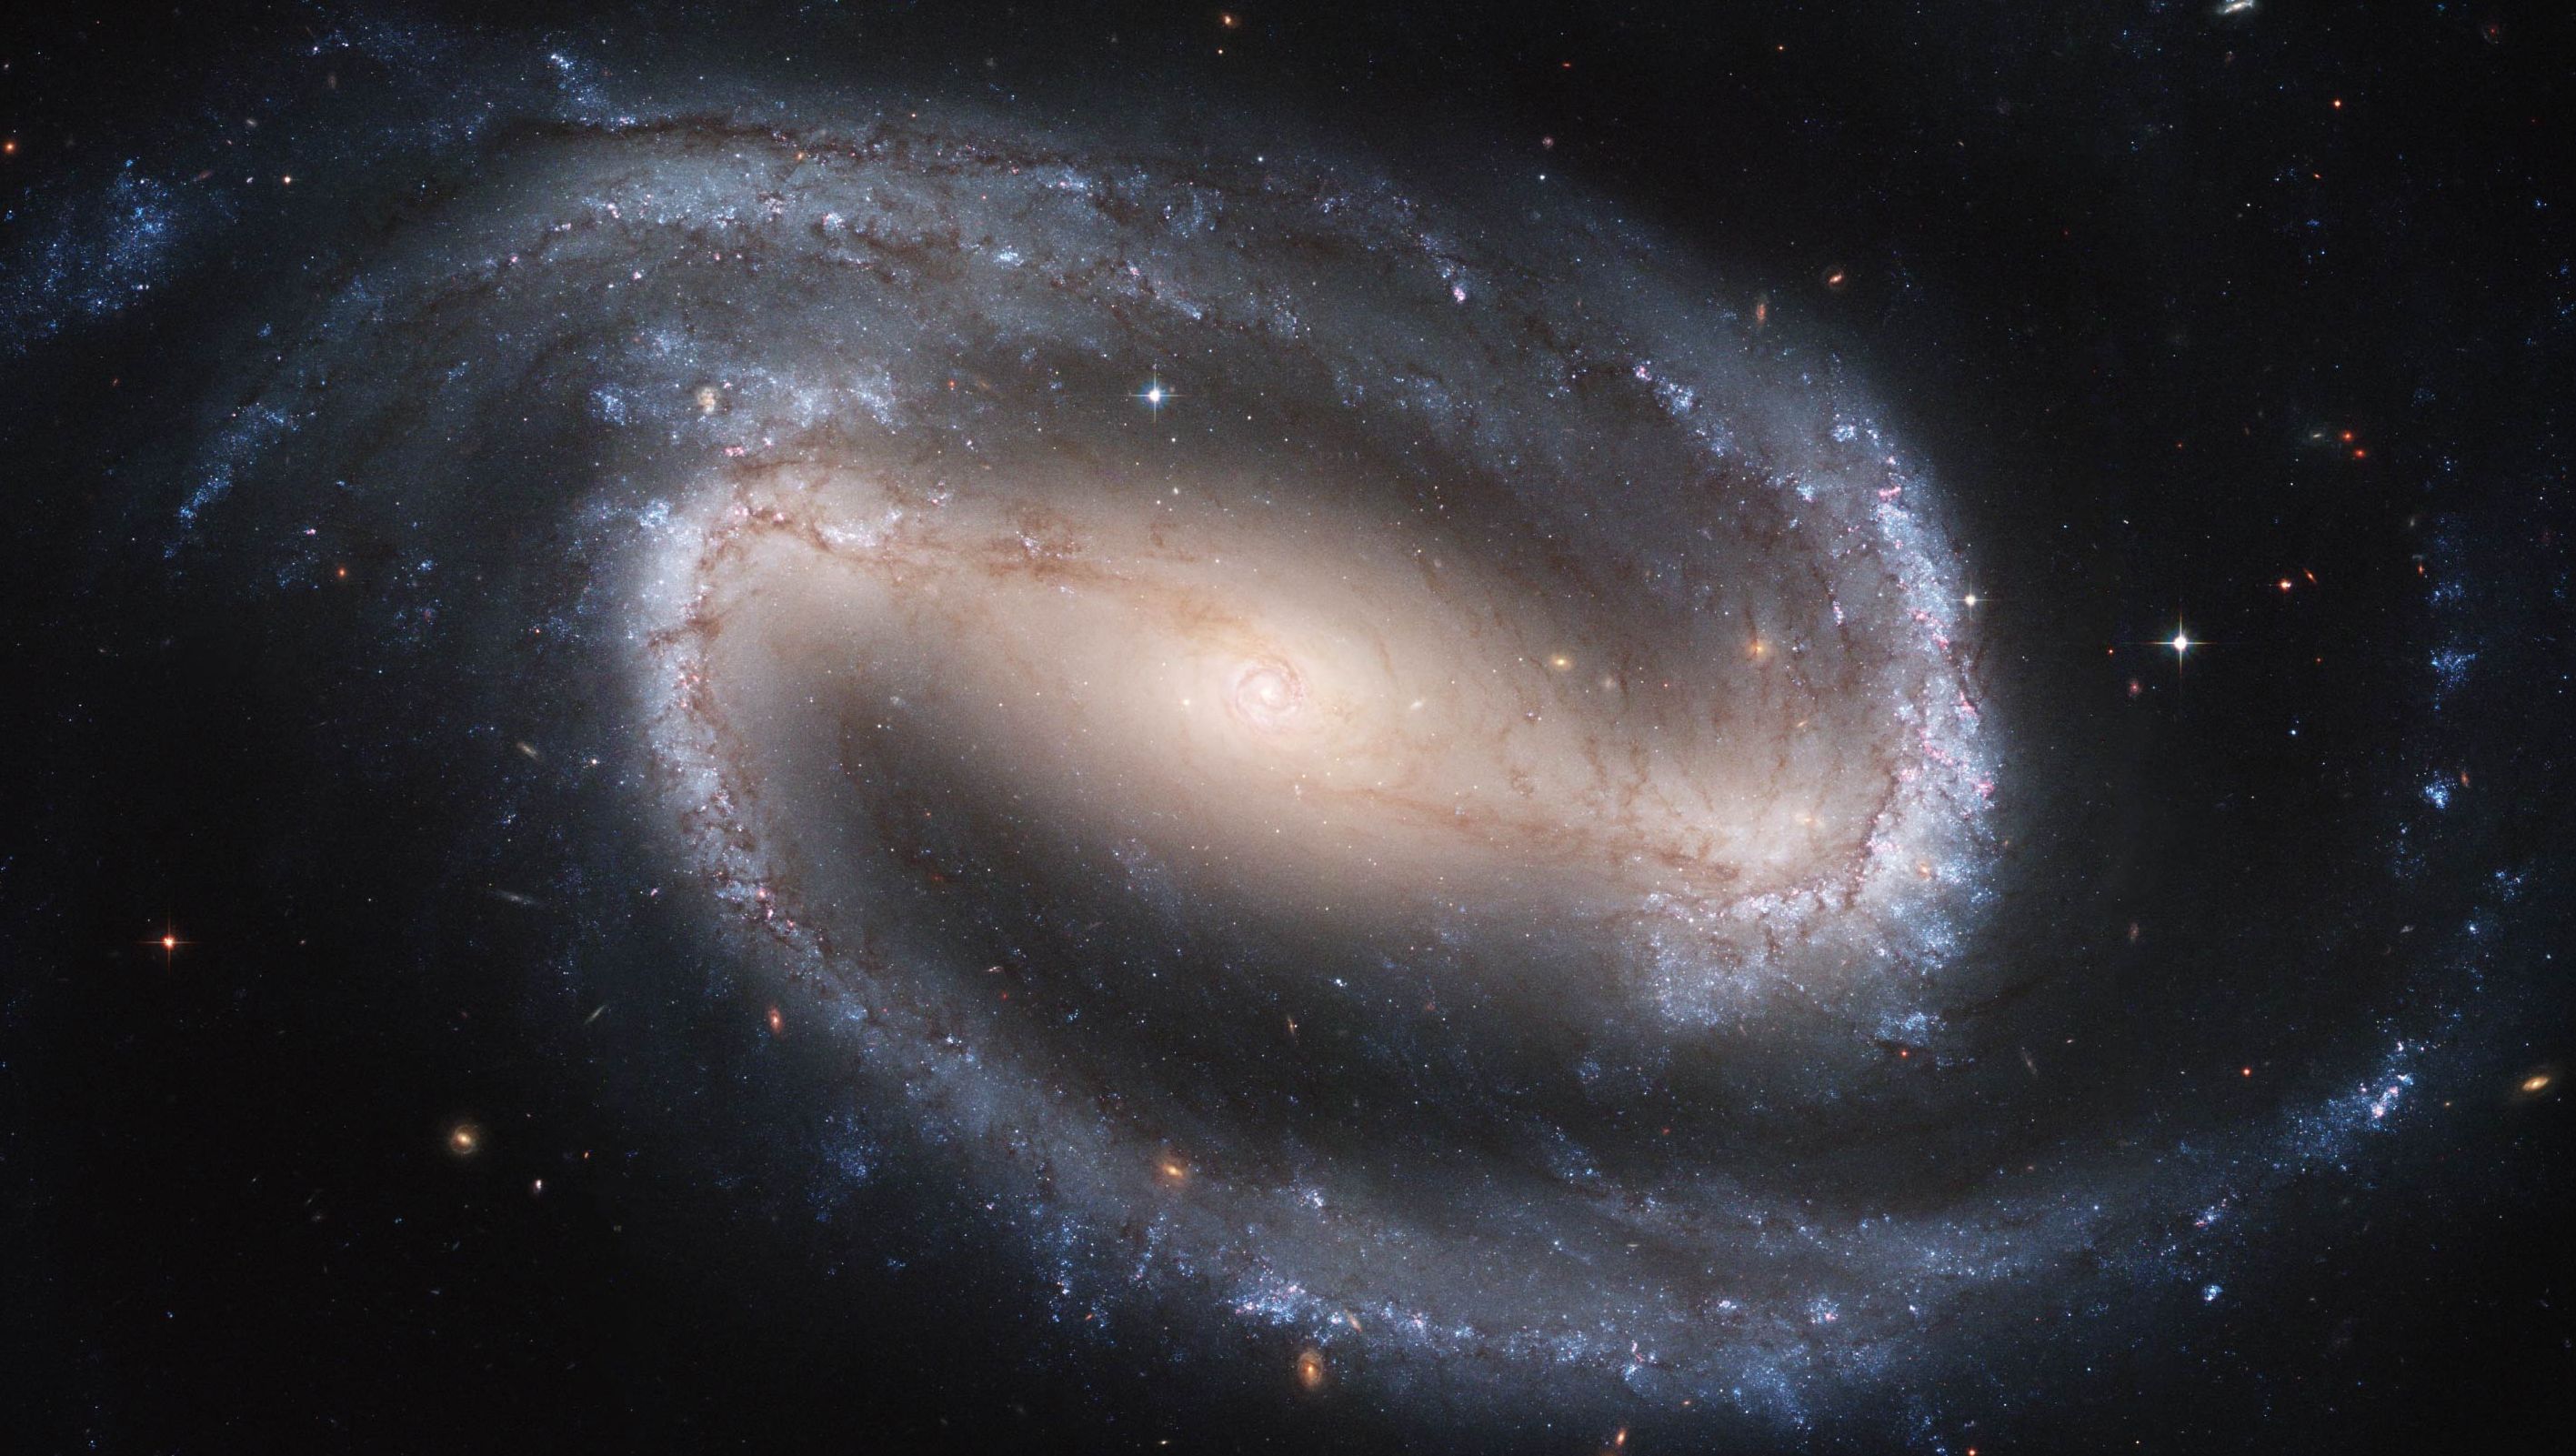 Spiral'naya galaktika s peremychkoi NGC 1300